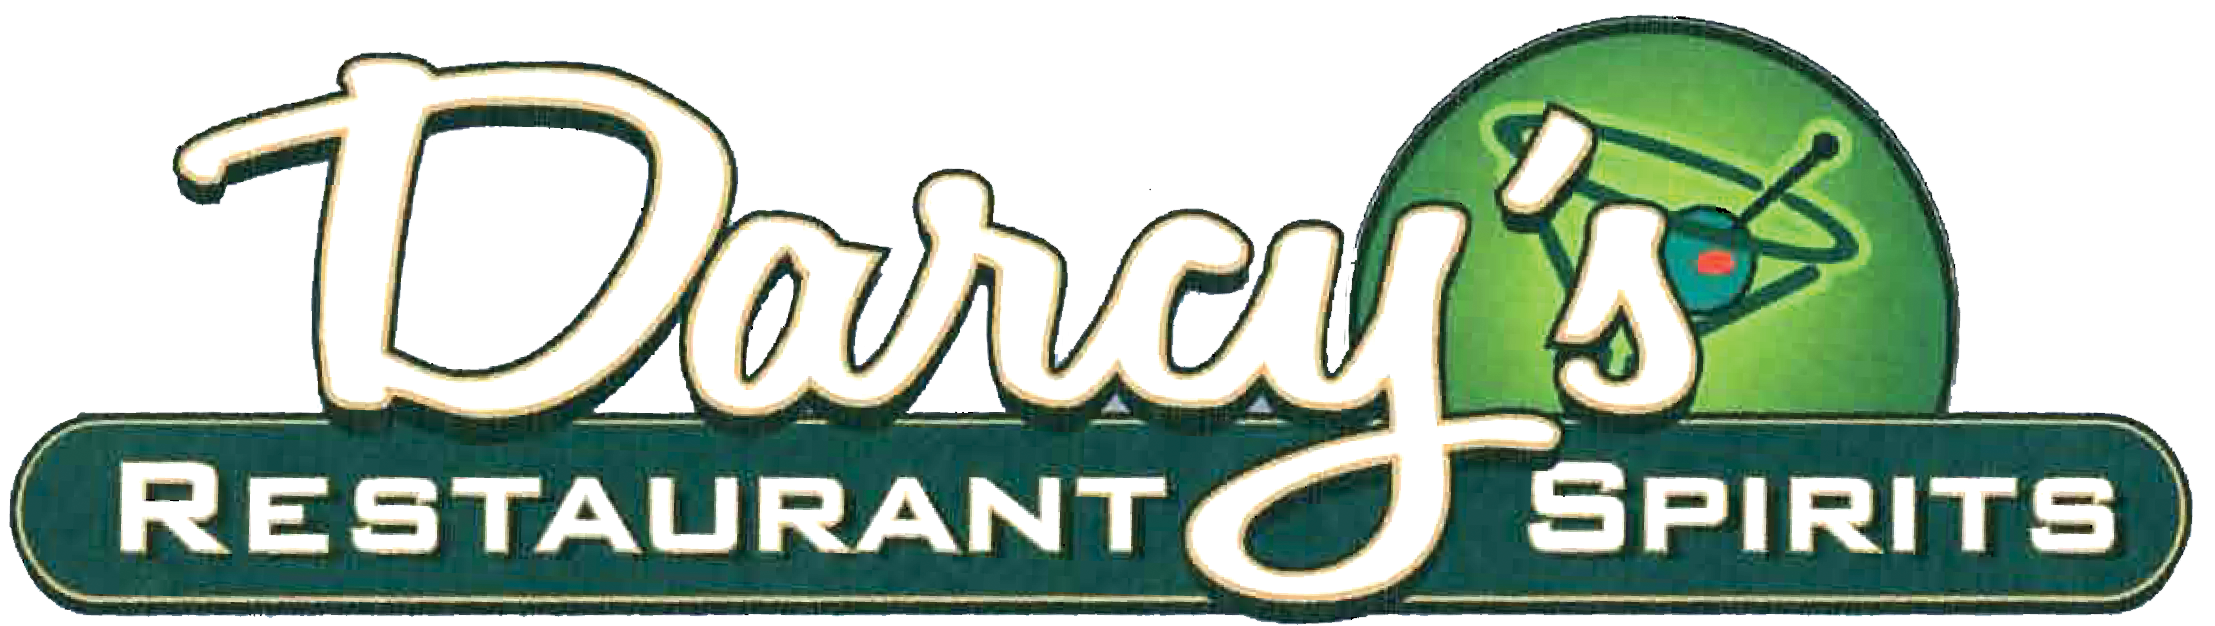 Darcy’s Restaurant and Spirits